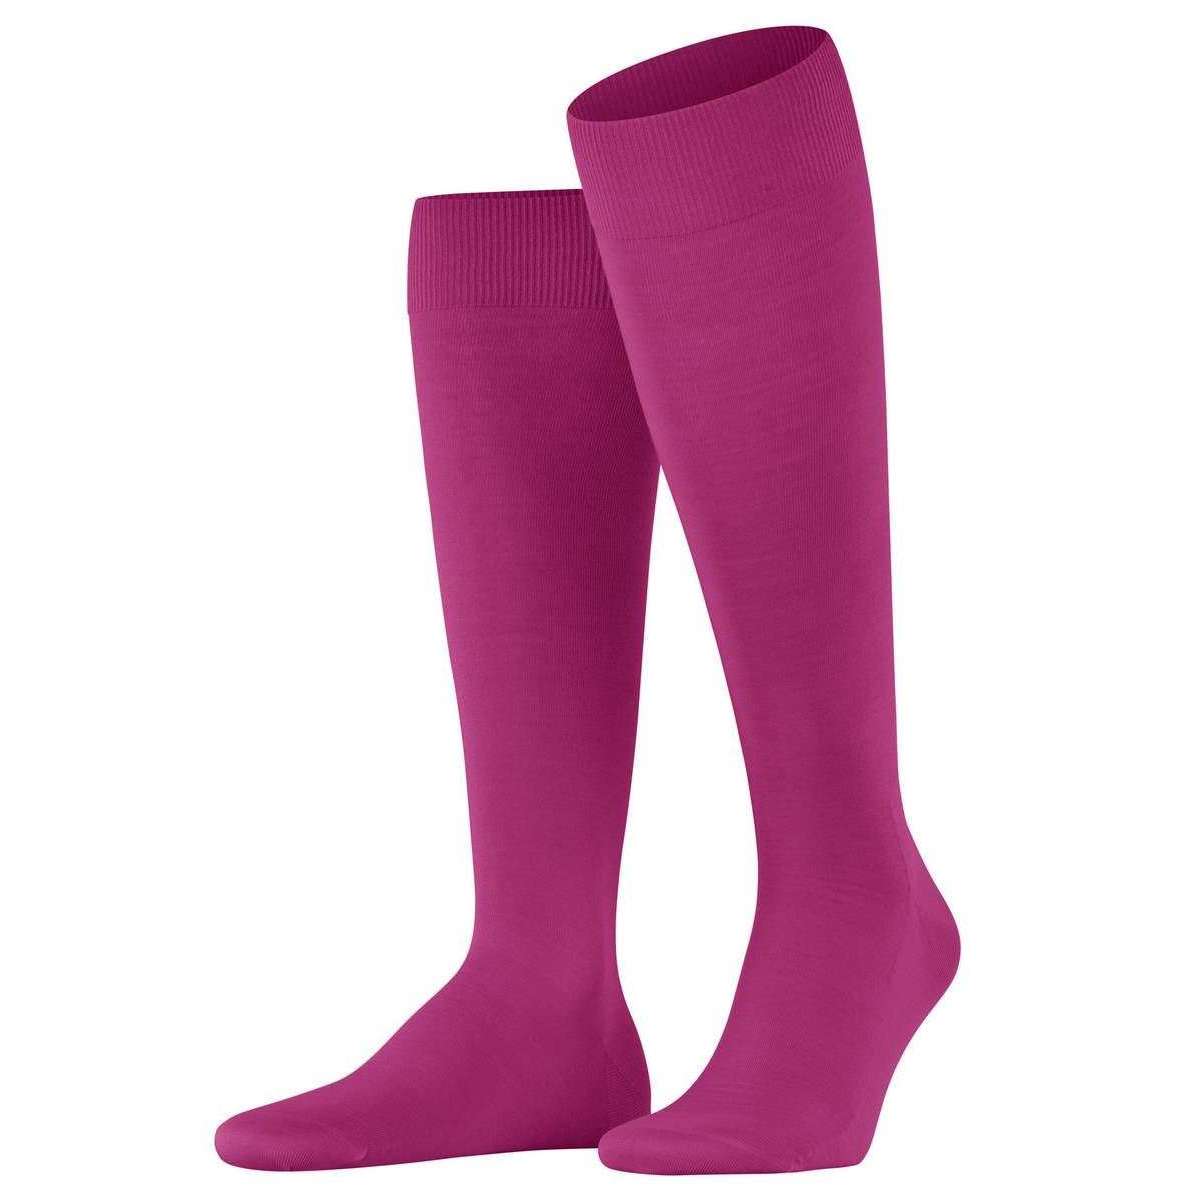 Falke Climawool Knee High Socks - Berry Pink